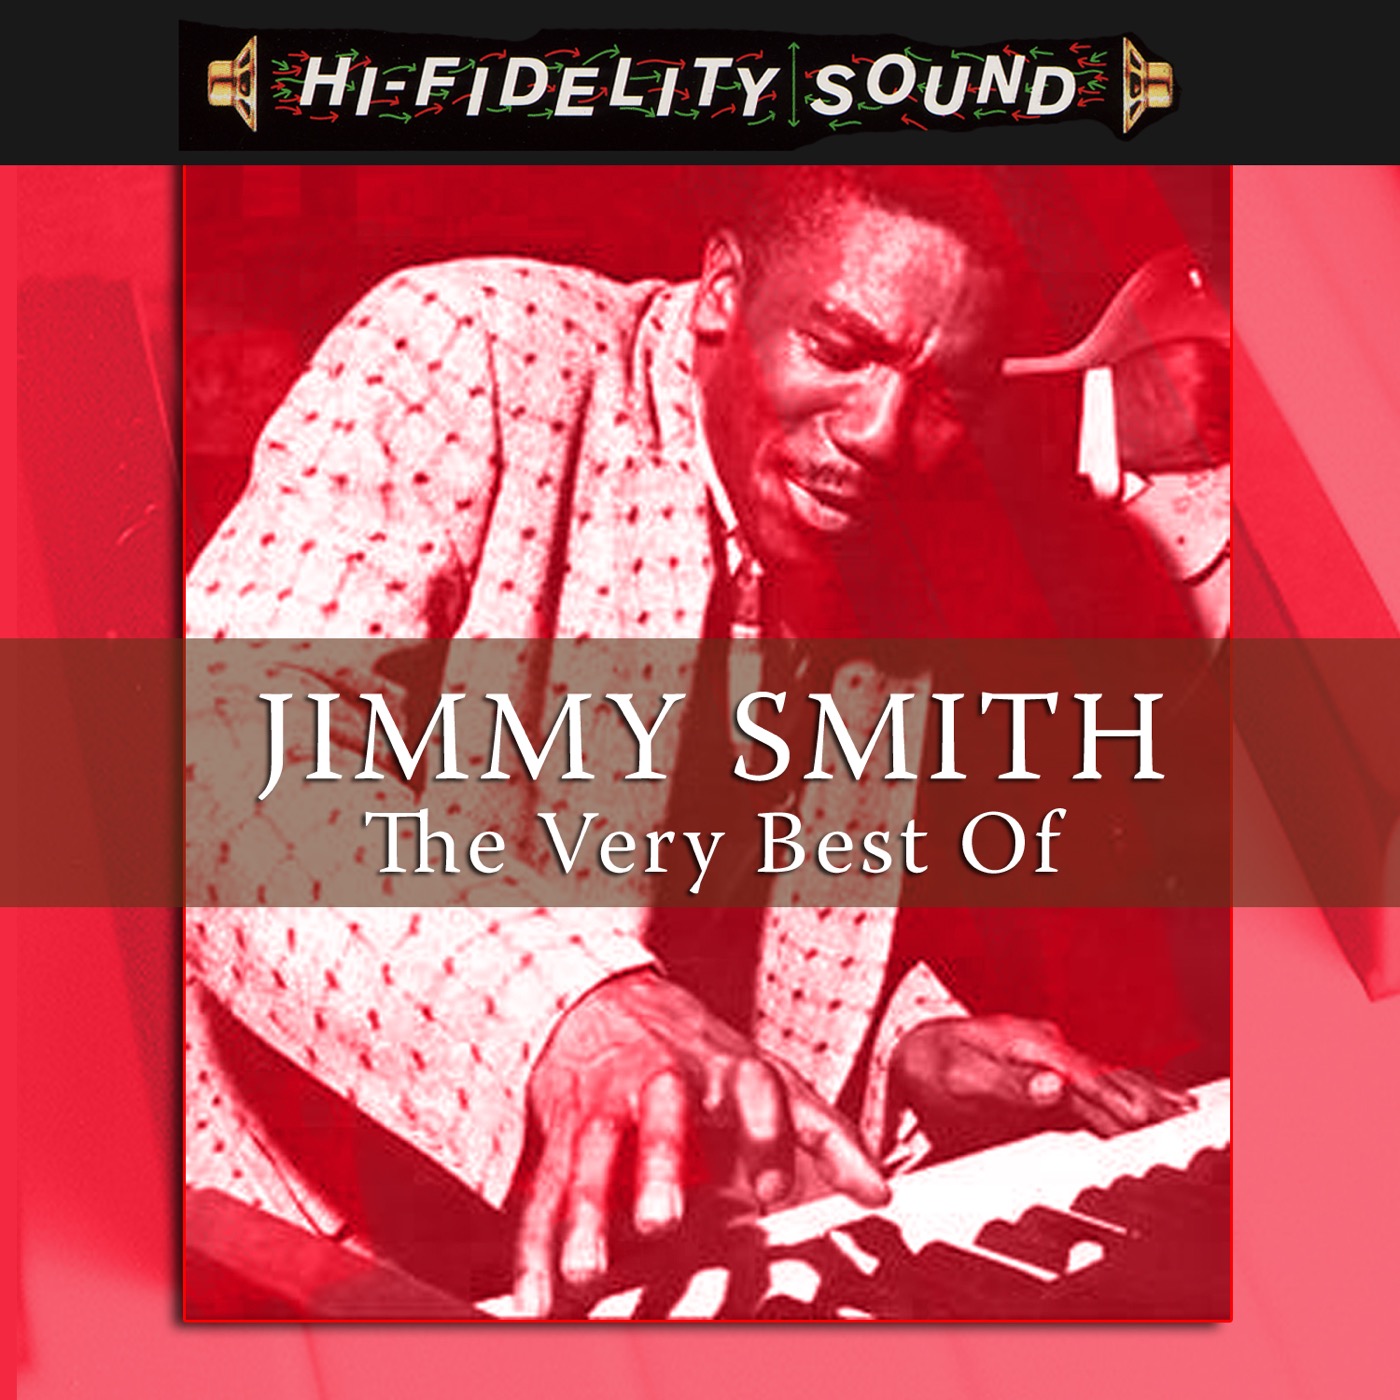 Get Better Sound By Jim Smith Pdf